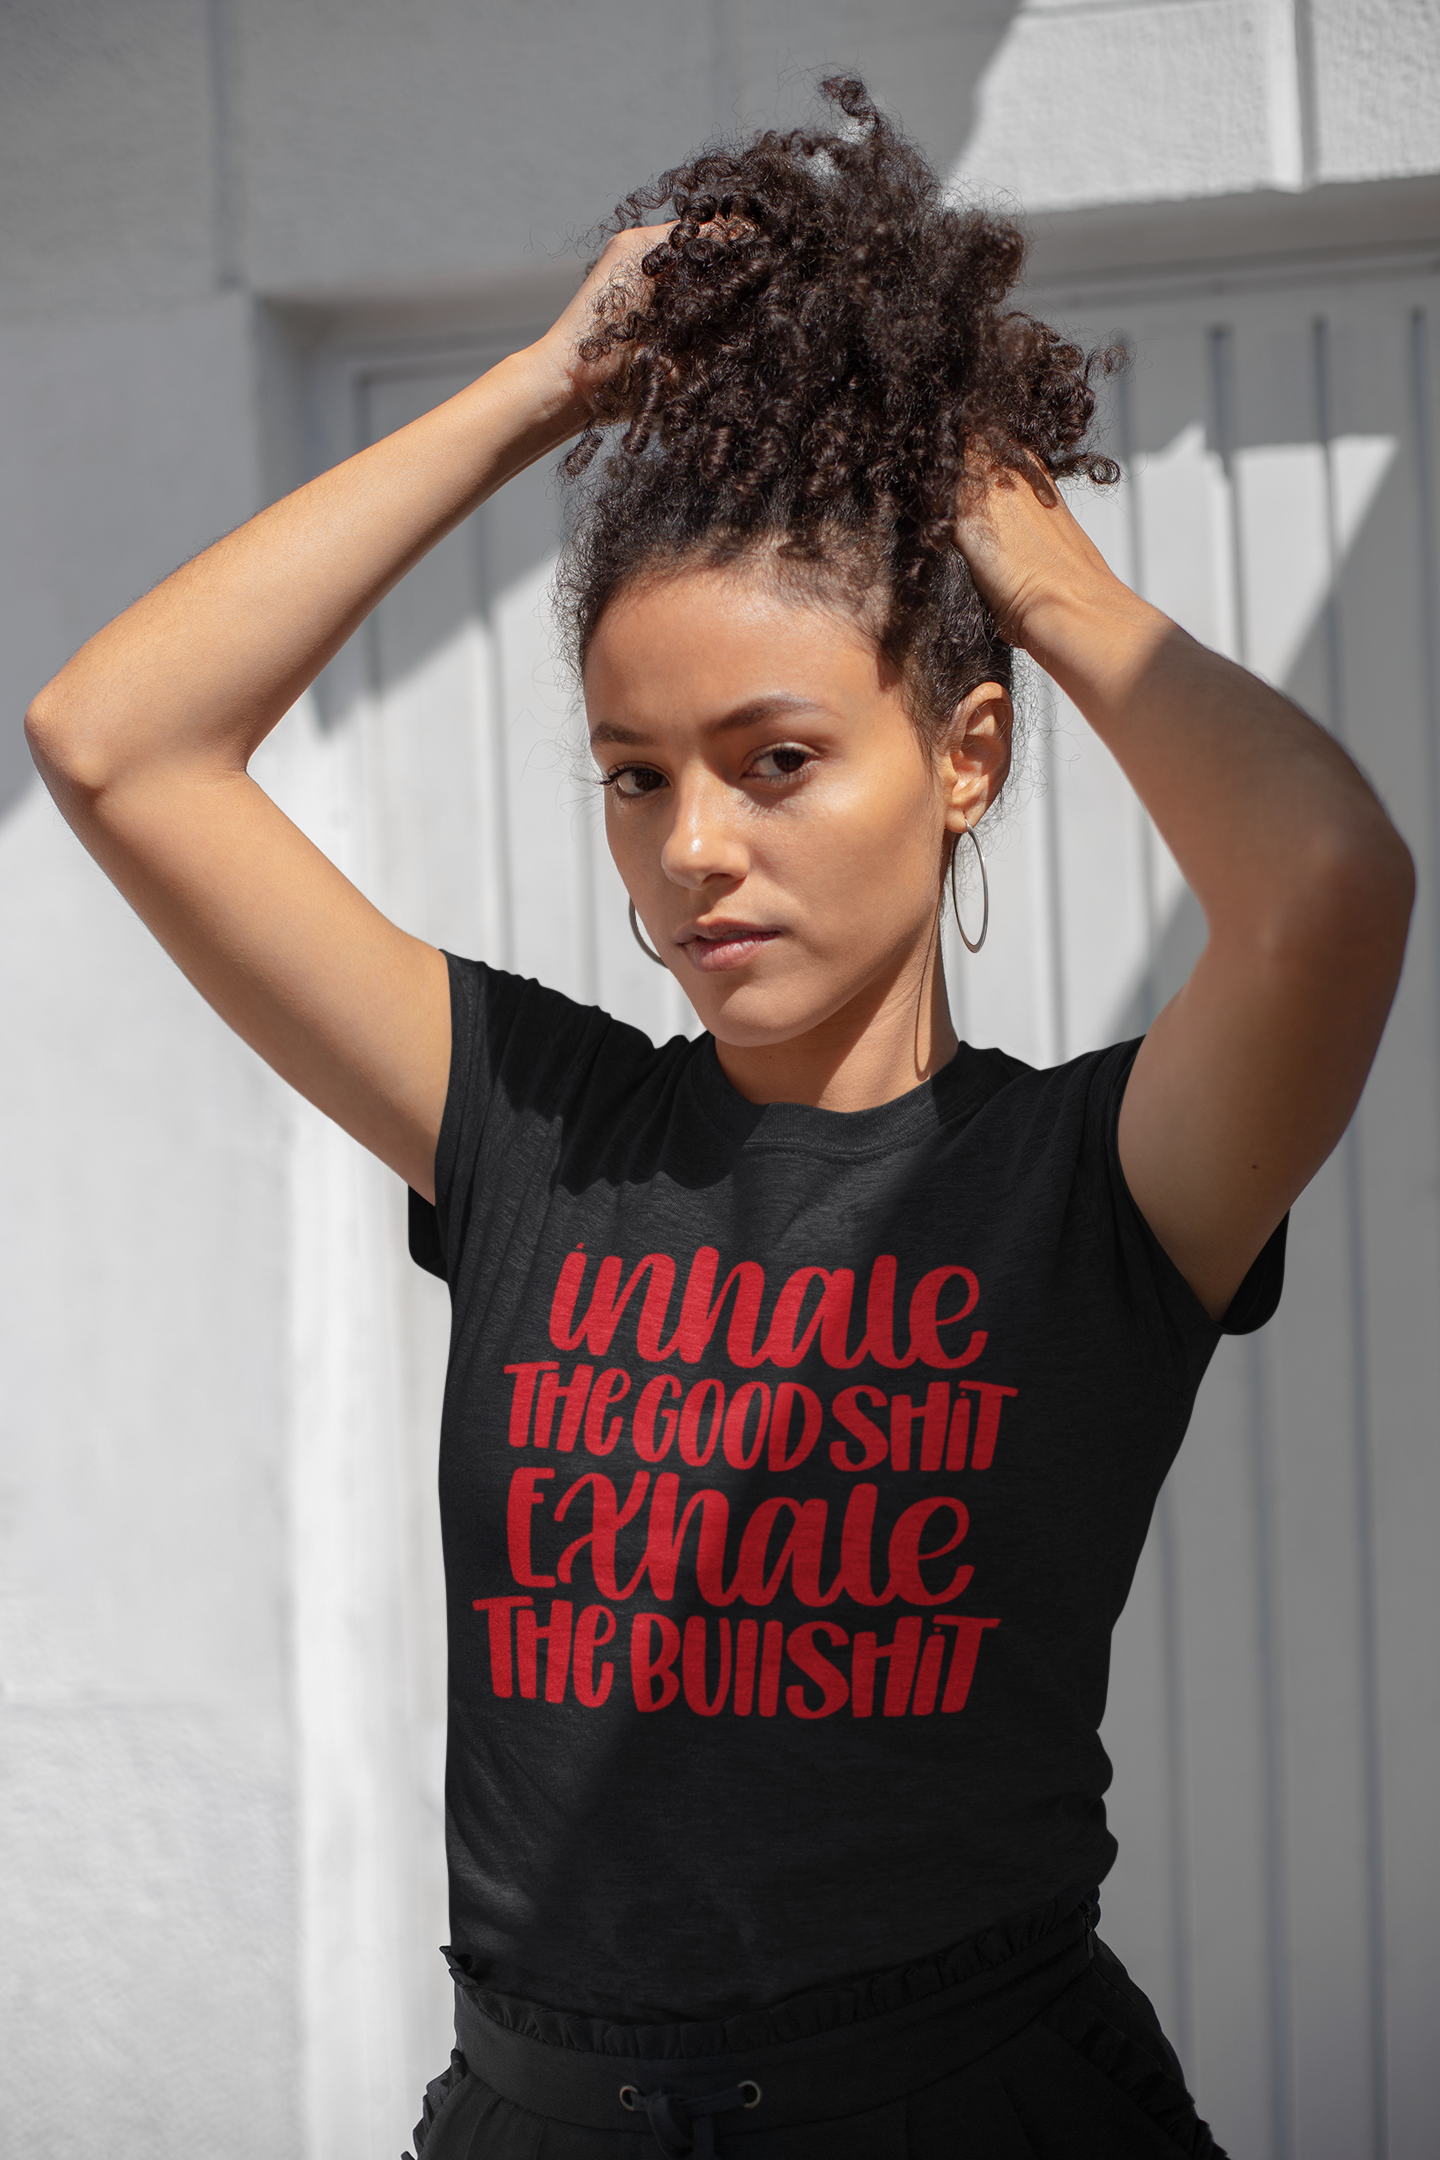 Inhale The Good Shit Exhale The Bullshit Women Unisex t-shirt, Red Ladies Fit Shirt